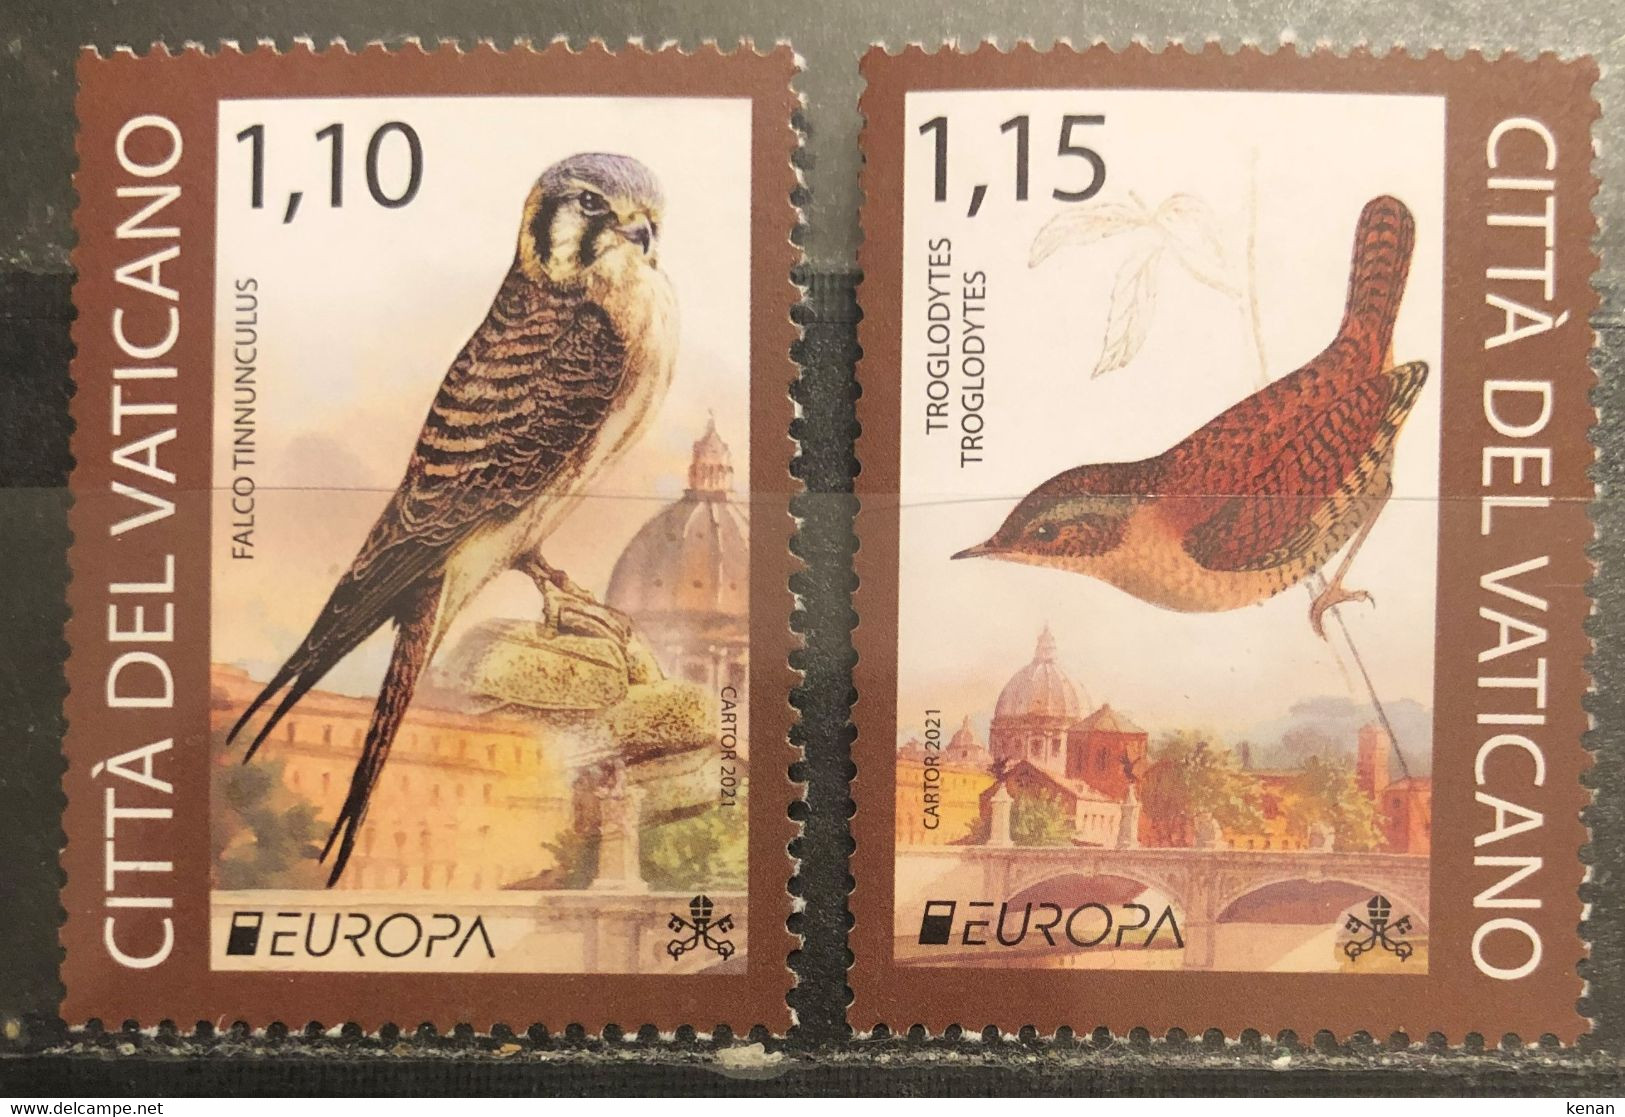 Vatican, 2021, EUROPA Stamps - Endangered National Wildlife (MNH) - Nuovi